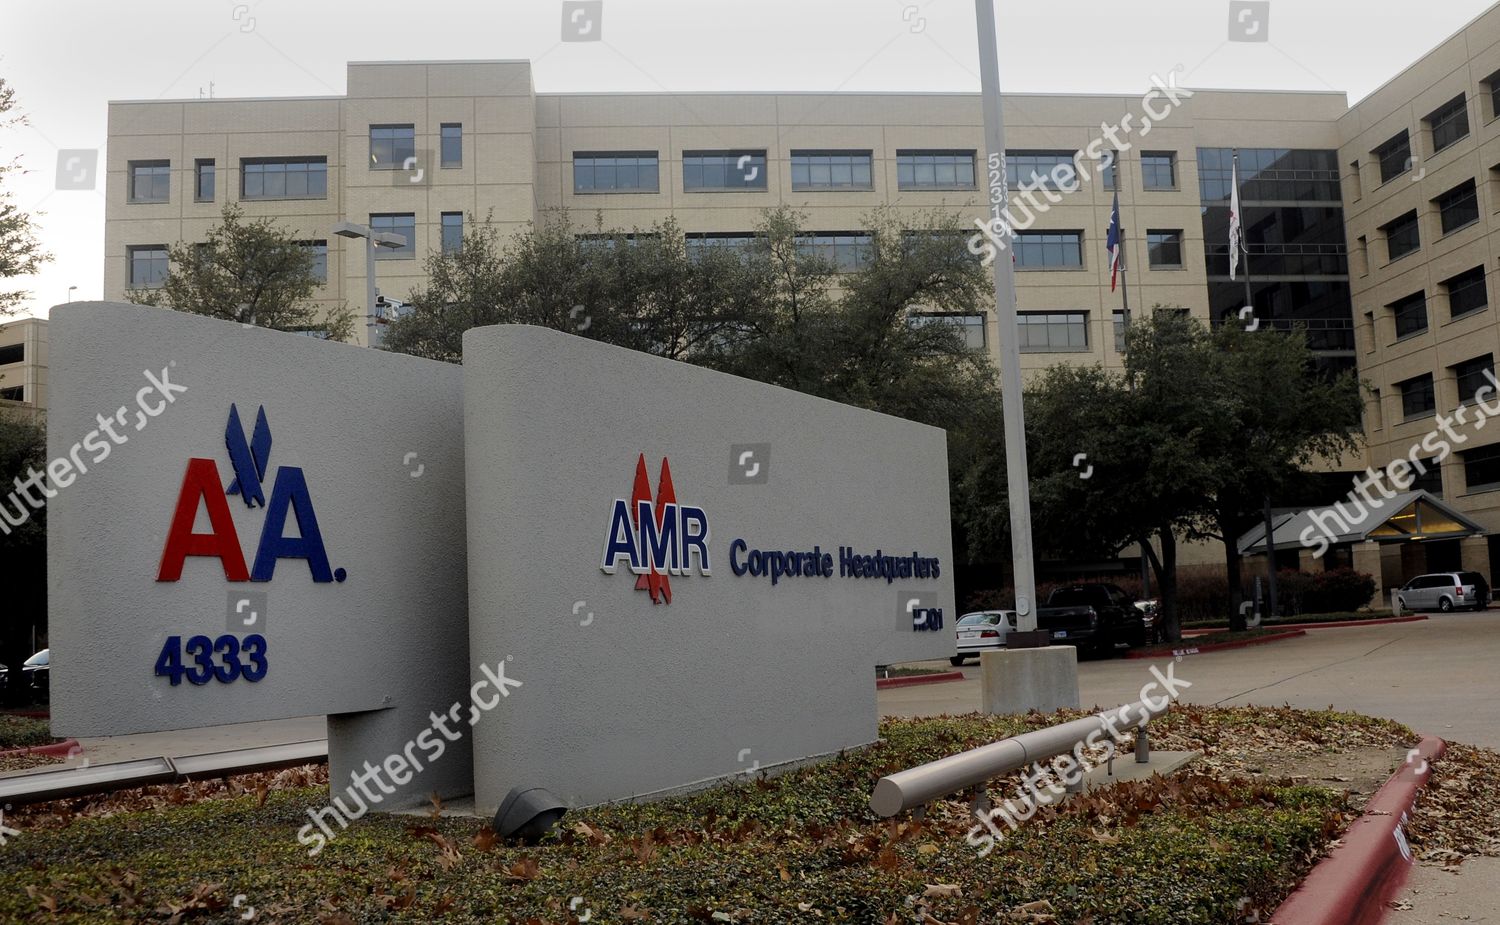 AA Corporate